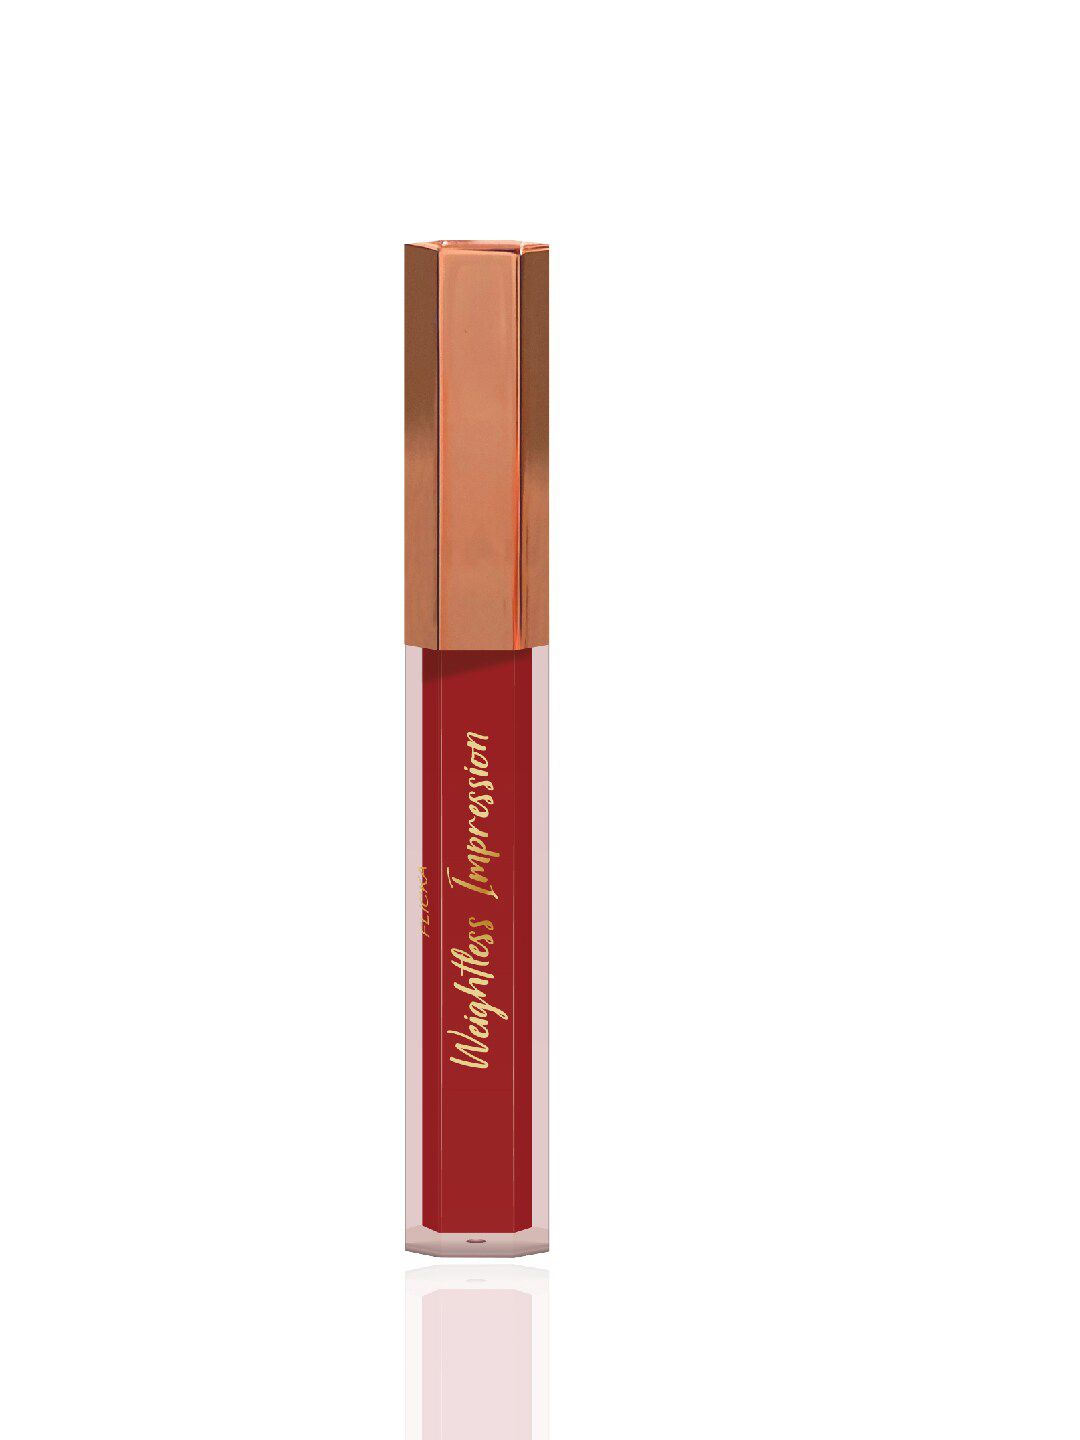 Flicka Weightless Impression Matte Liquid Lipstick - 01 January Price in India